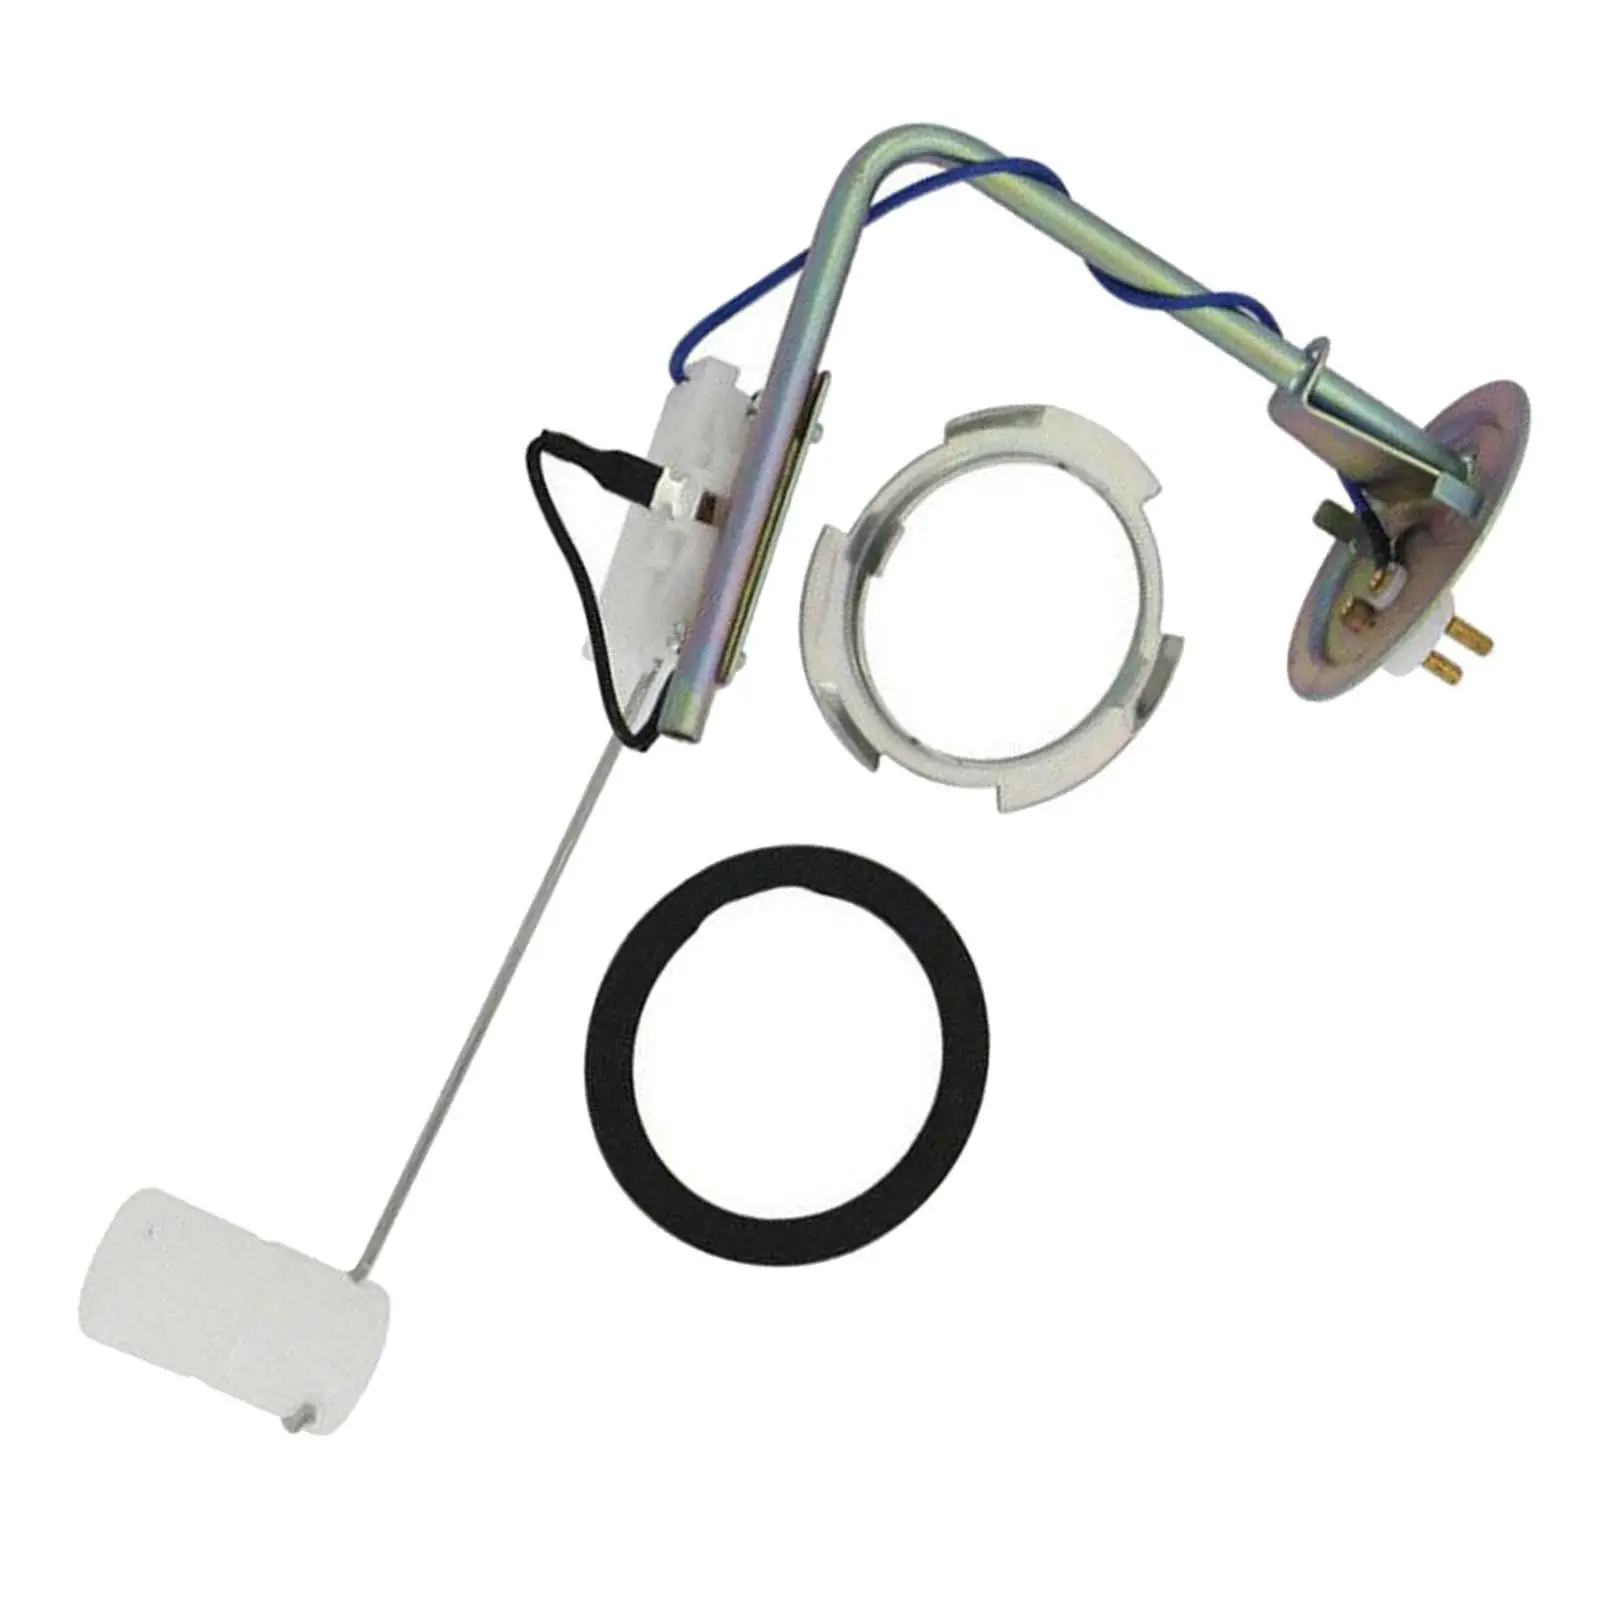 Fuel Pump Sender Replaces Easy Installation Accessories Spare Parts Professional